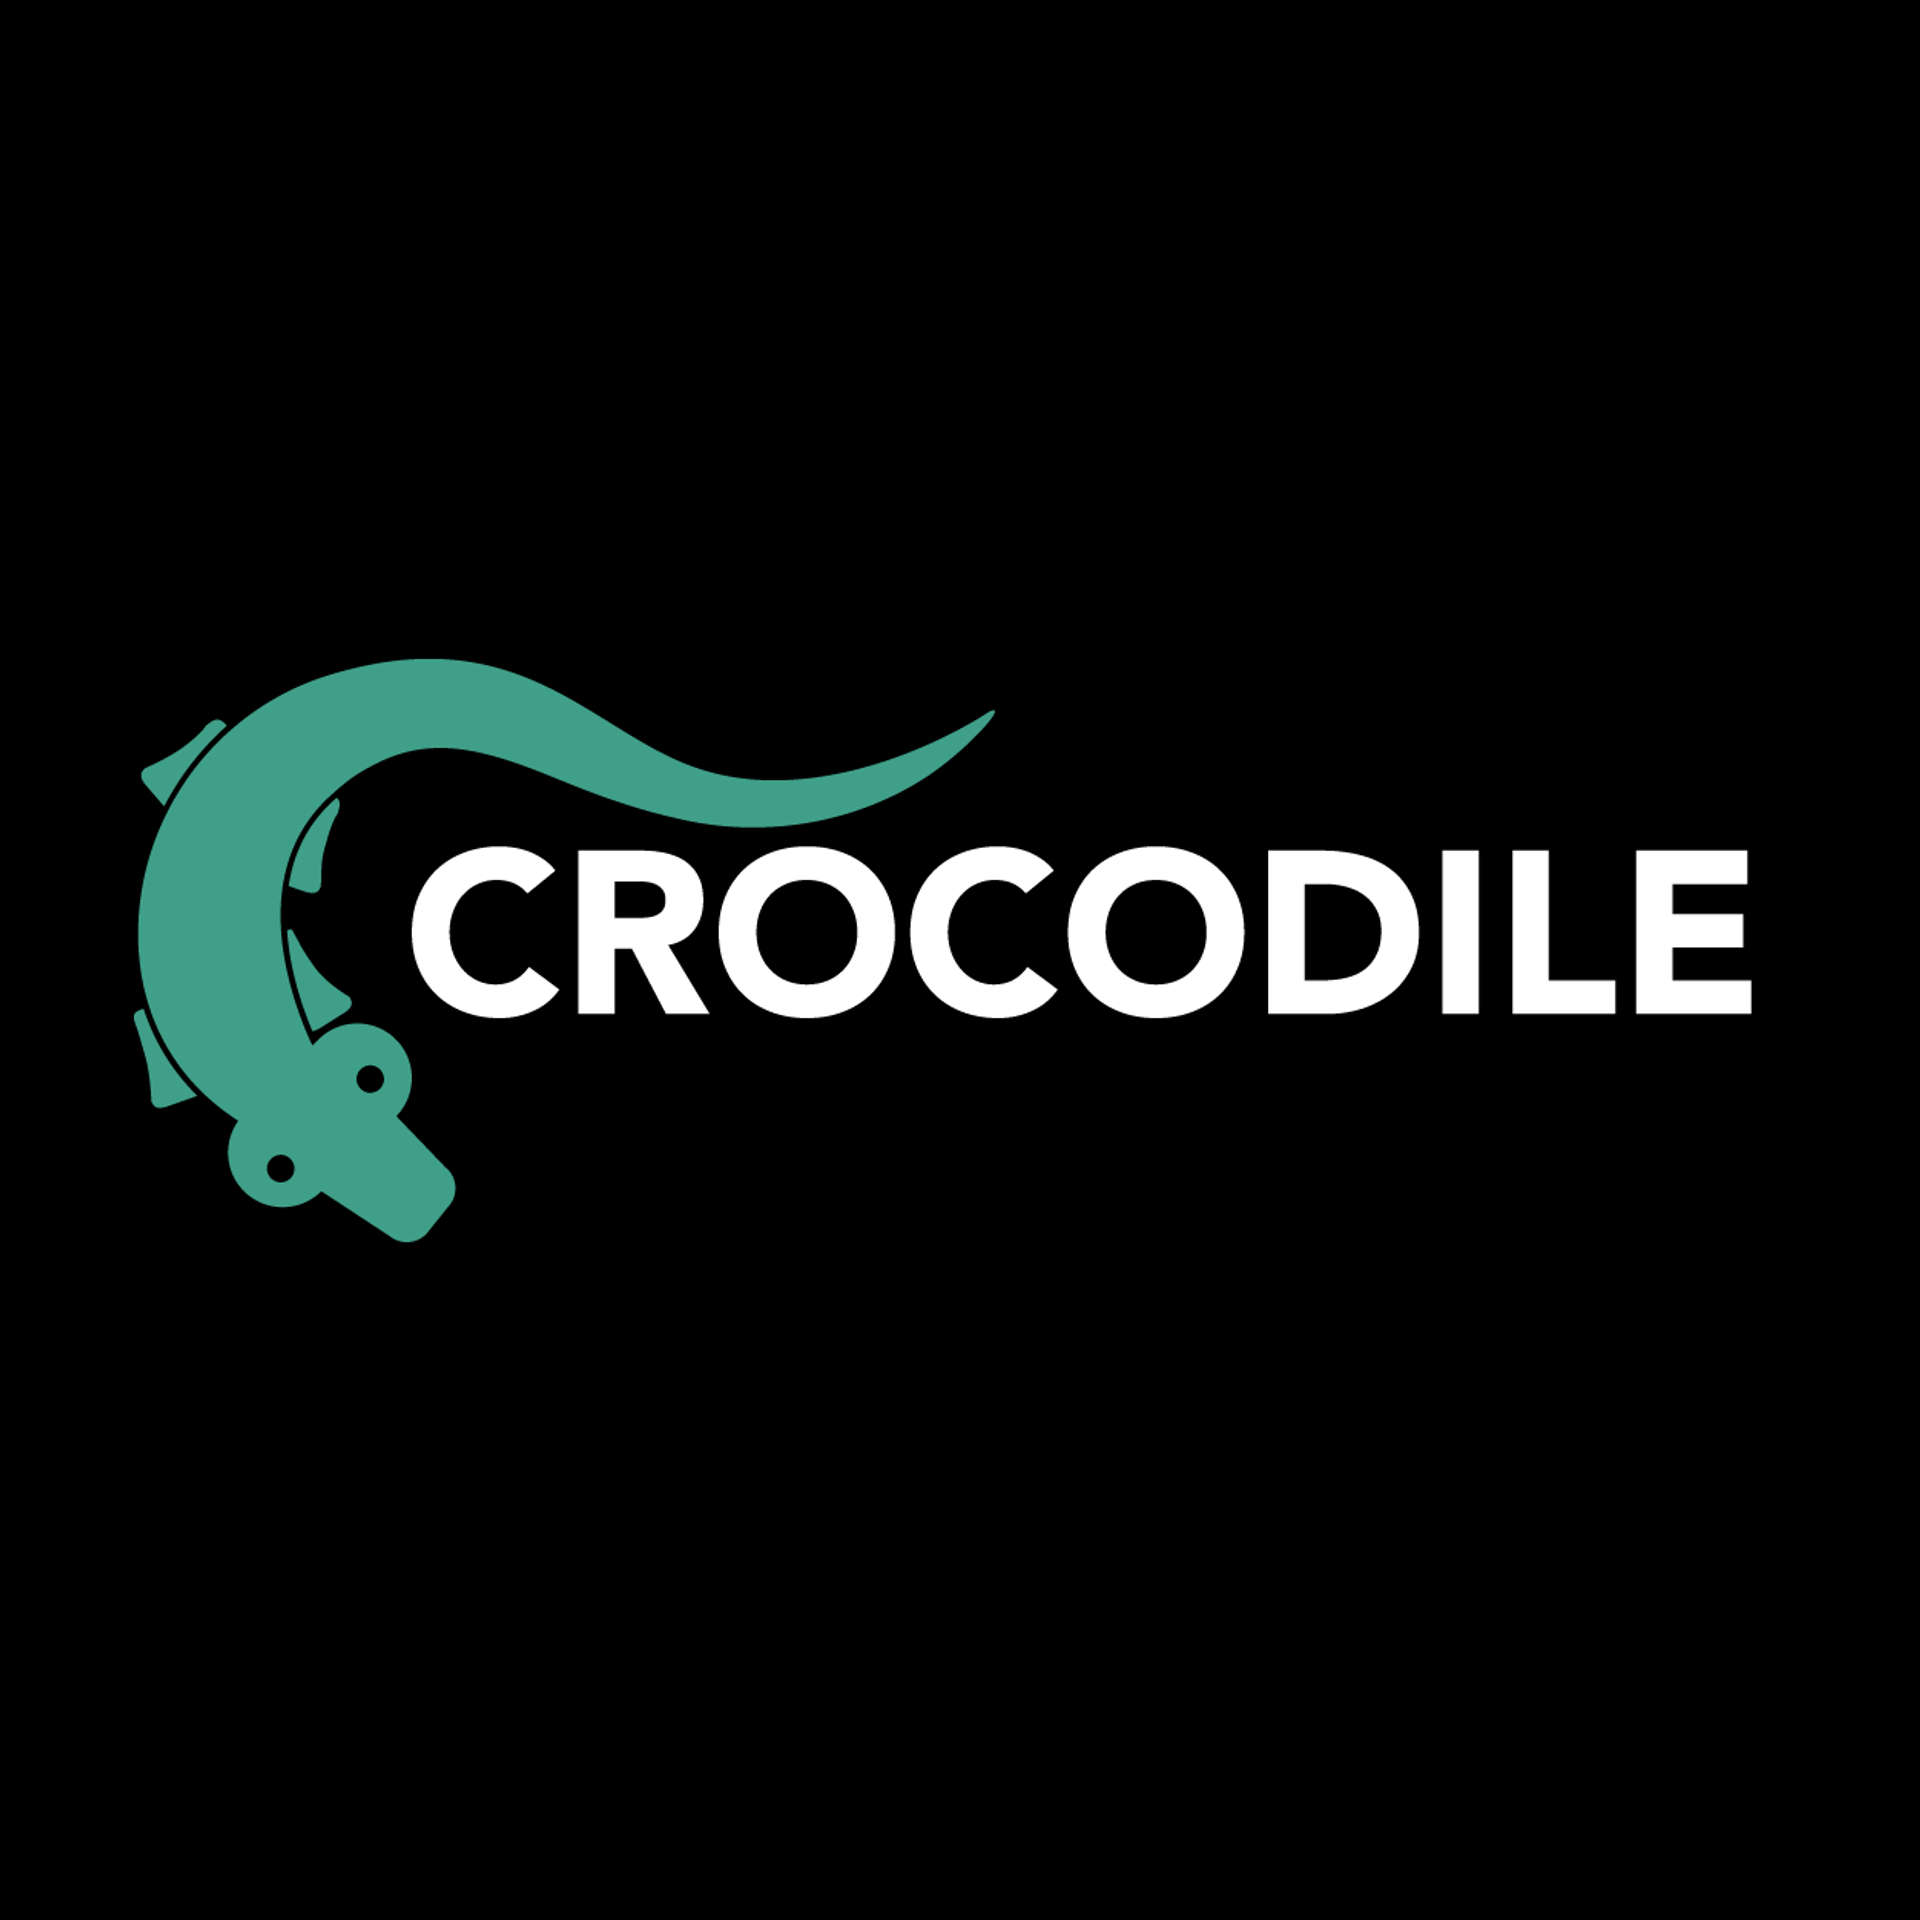 Crocodile - Crunchbase Company Profile & Funding